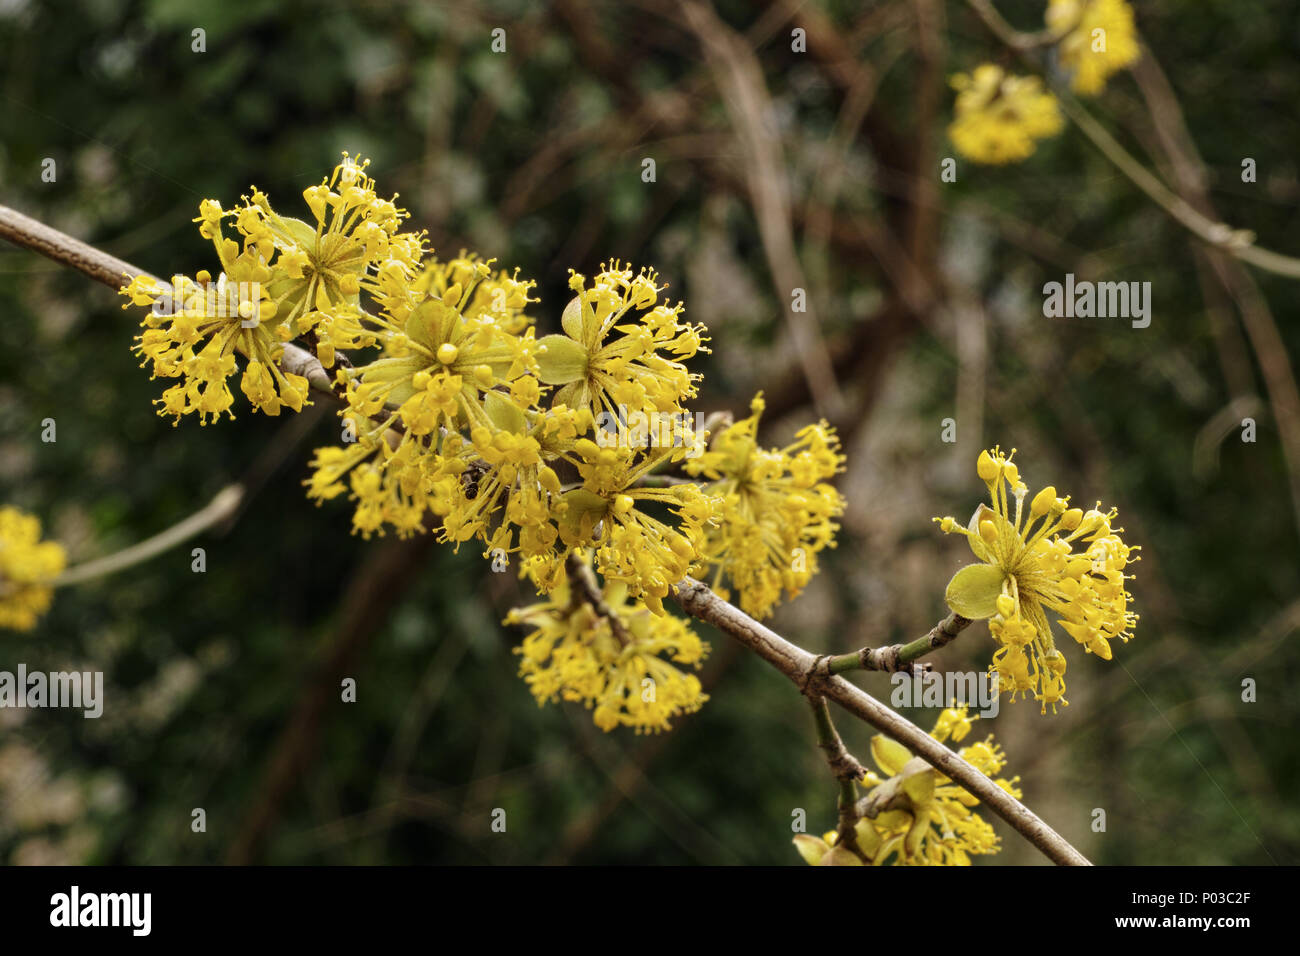 european cornel plant in bloom Stock Photo